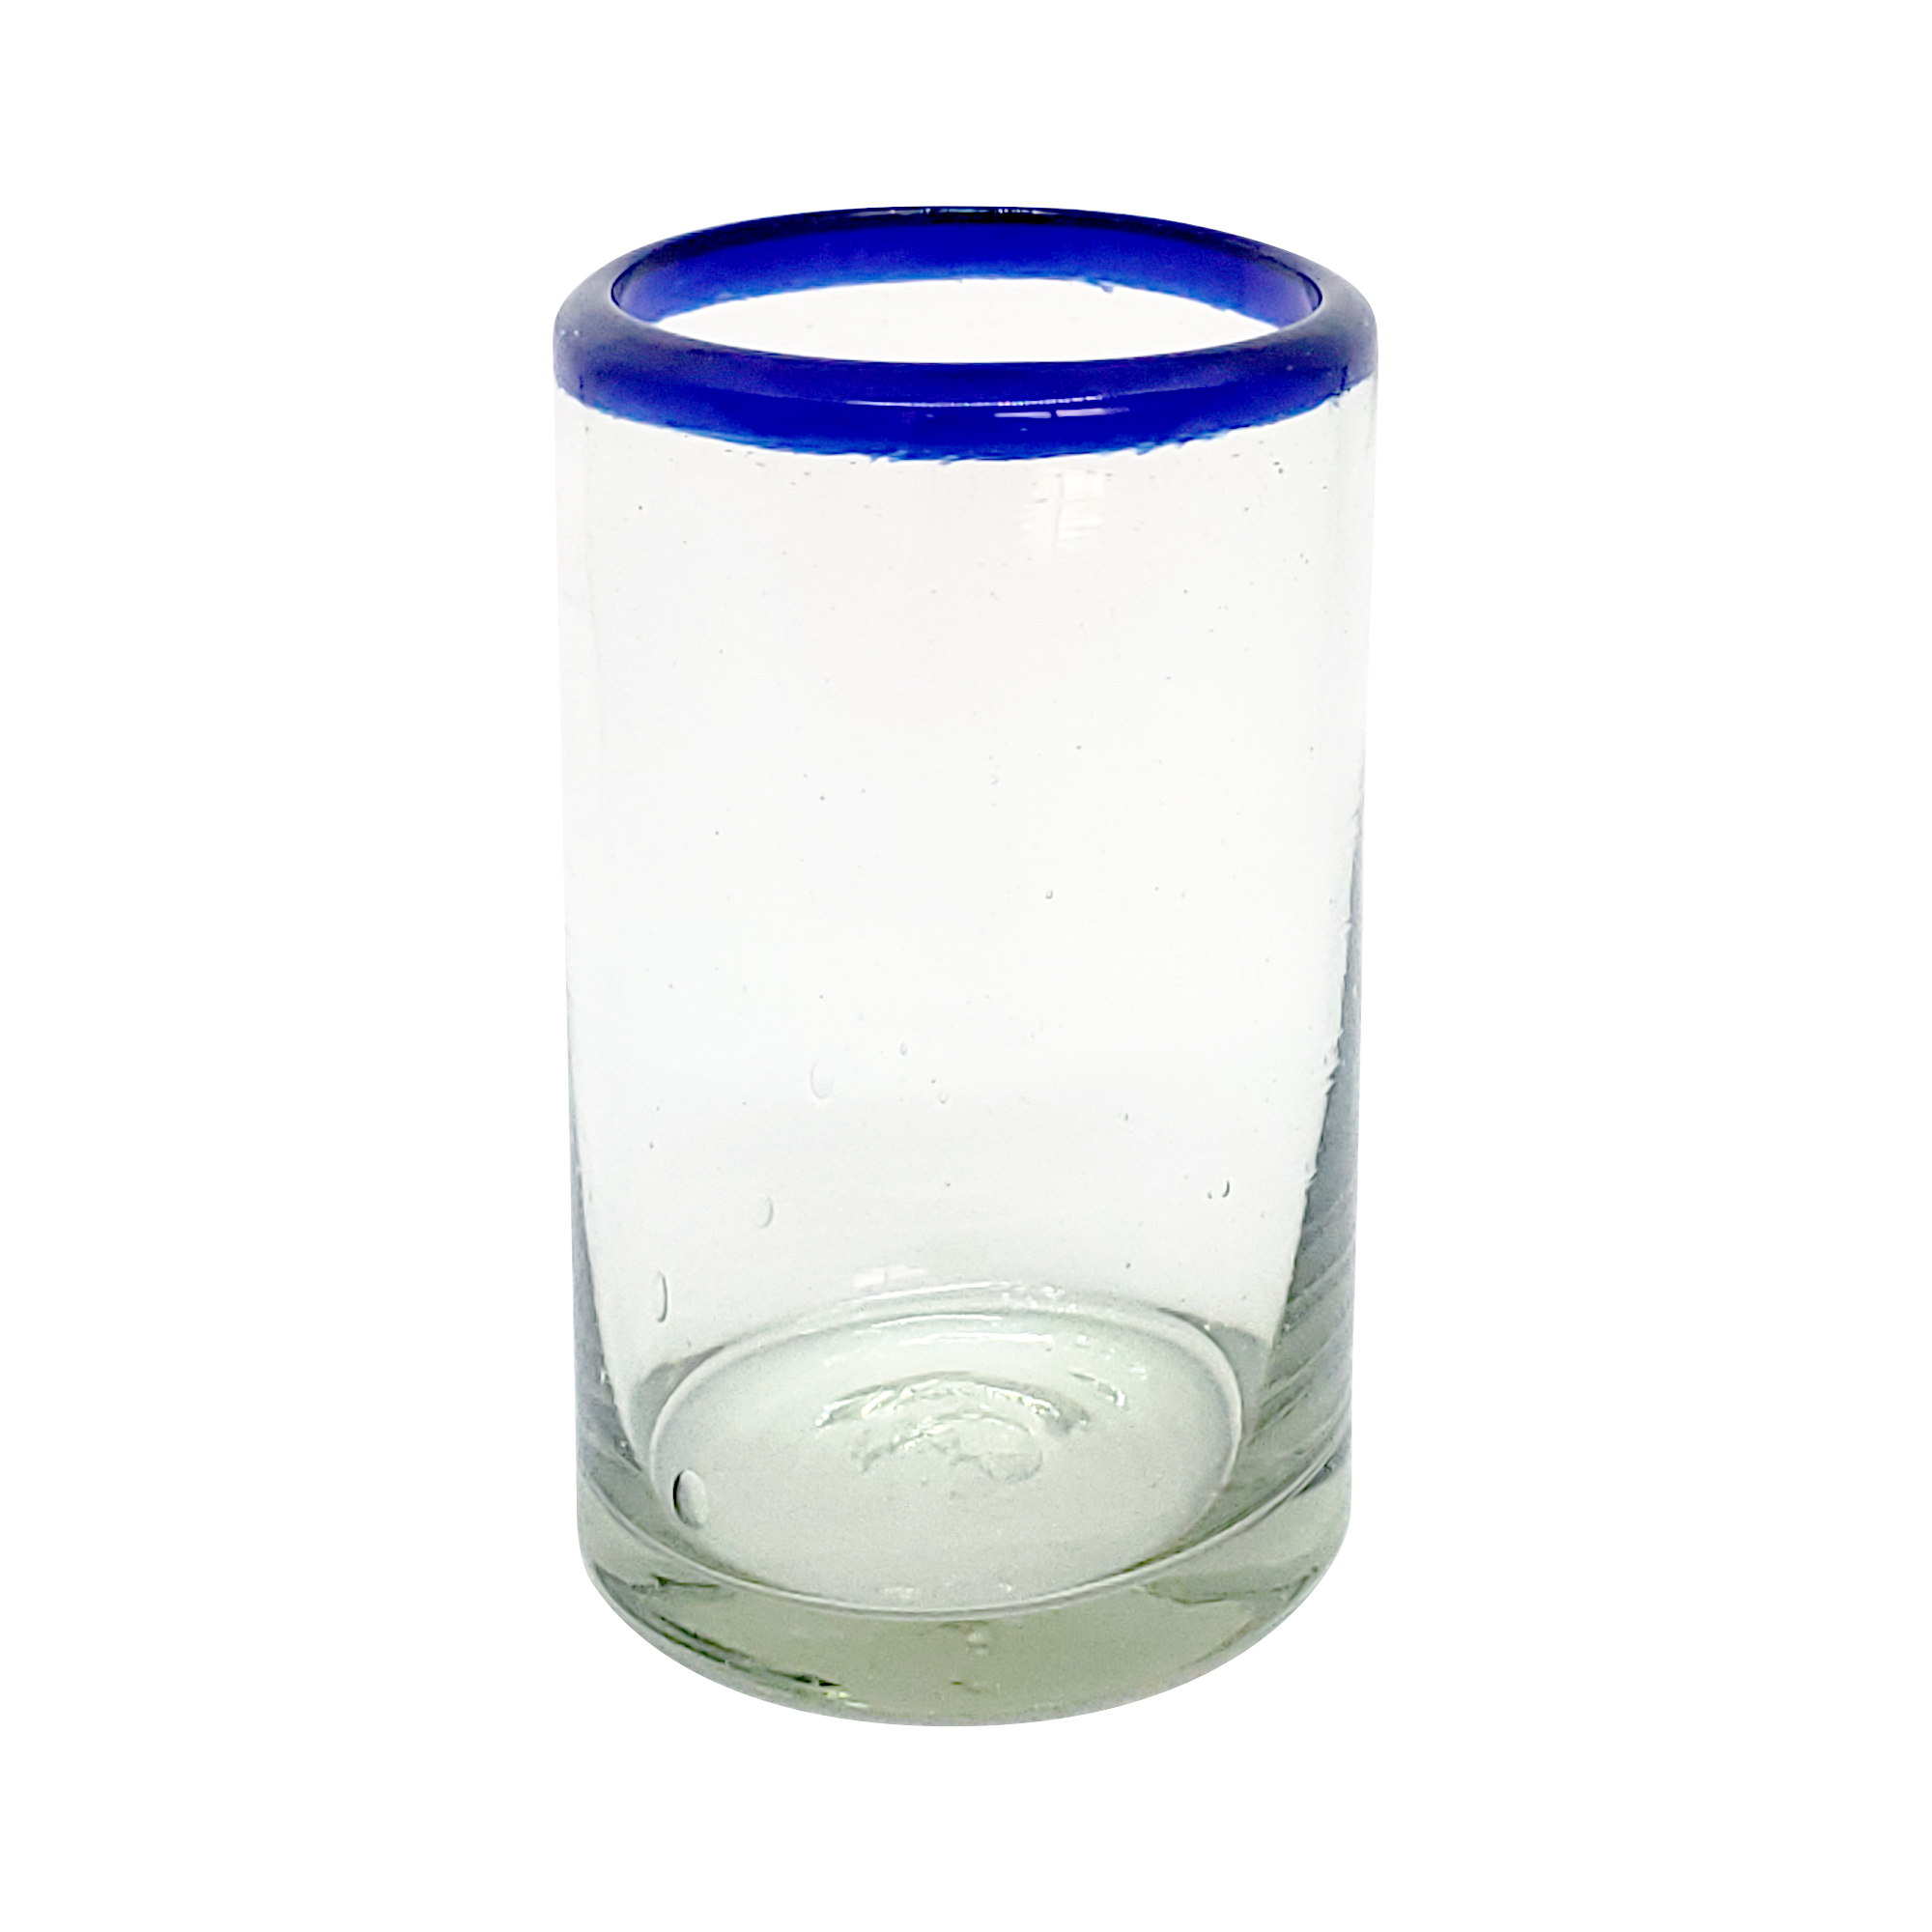  / Cobalt Blue Rim 9 oz Juice Glasses (set of 6)